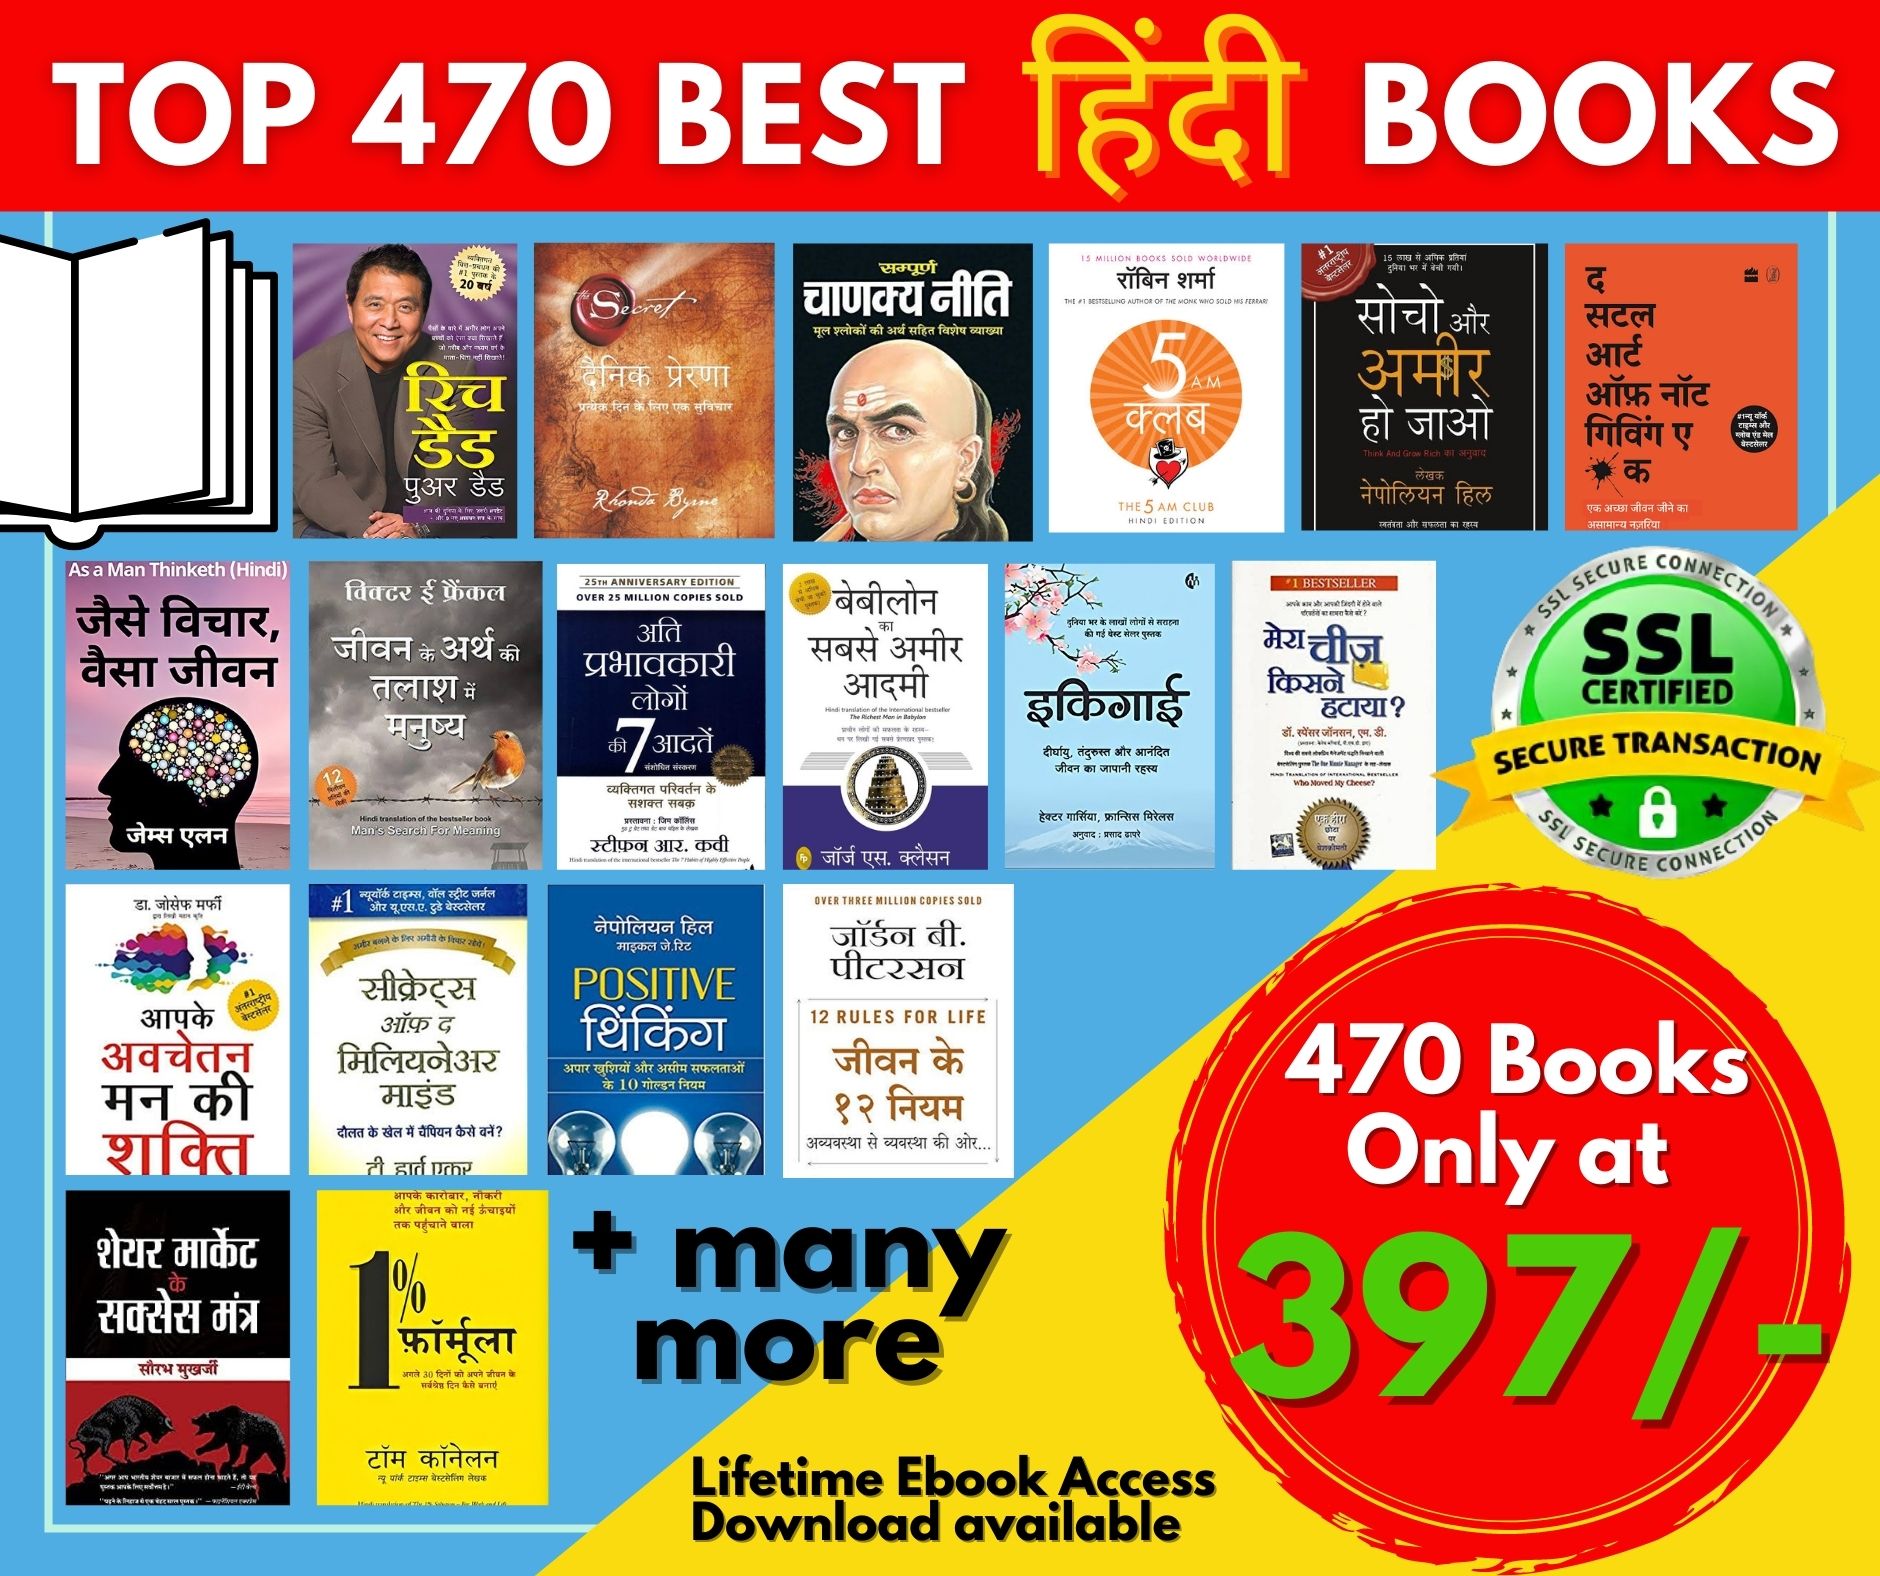 470 Best Selling Ebooks (In Hindi) onlinemarketingtools